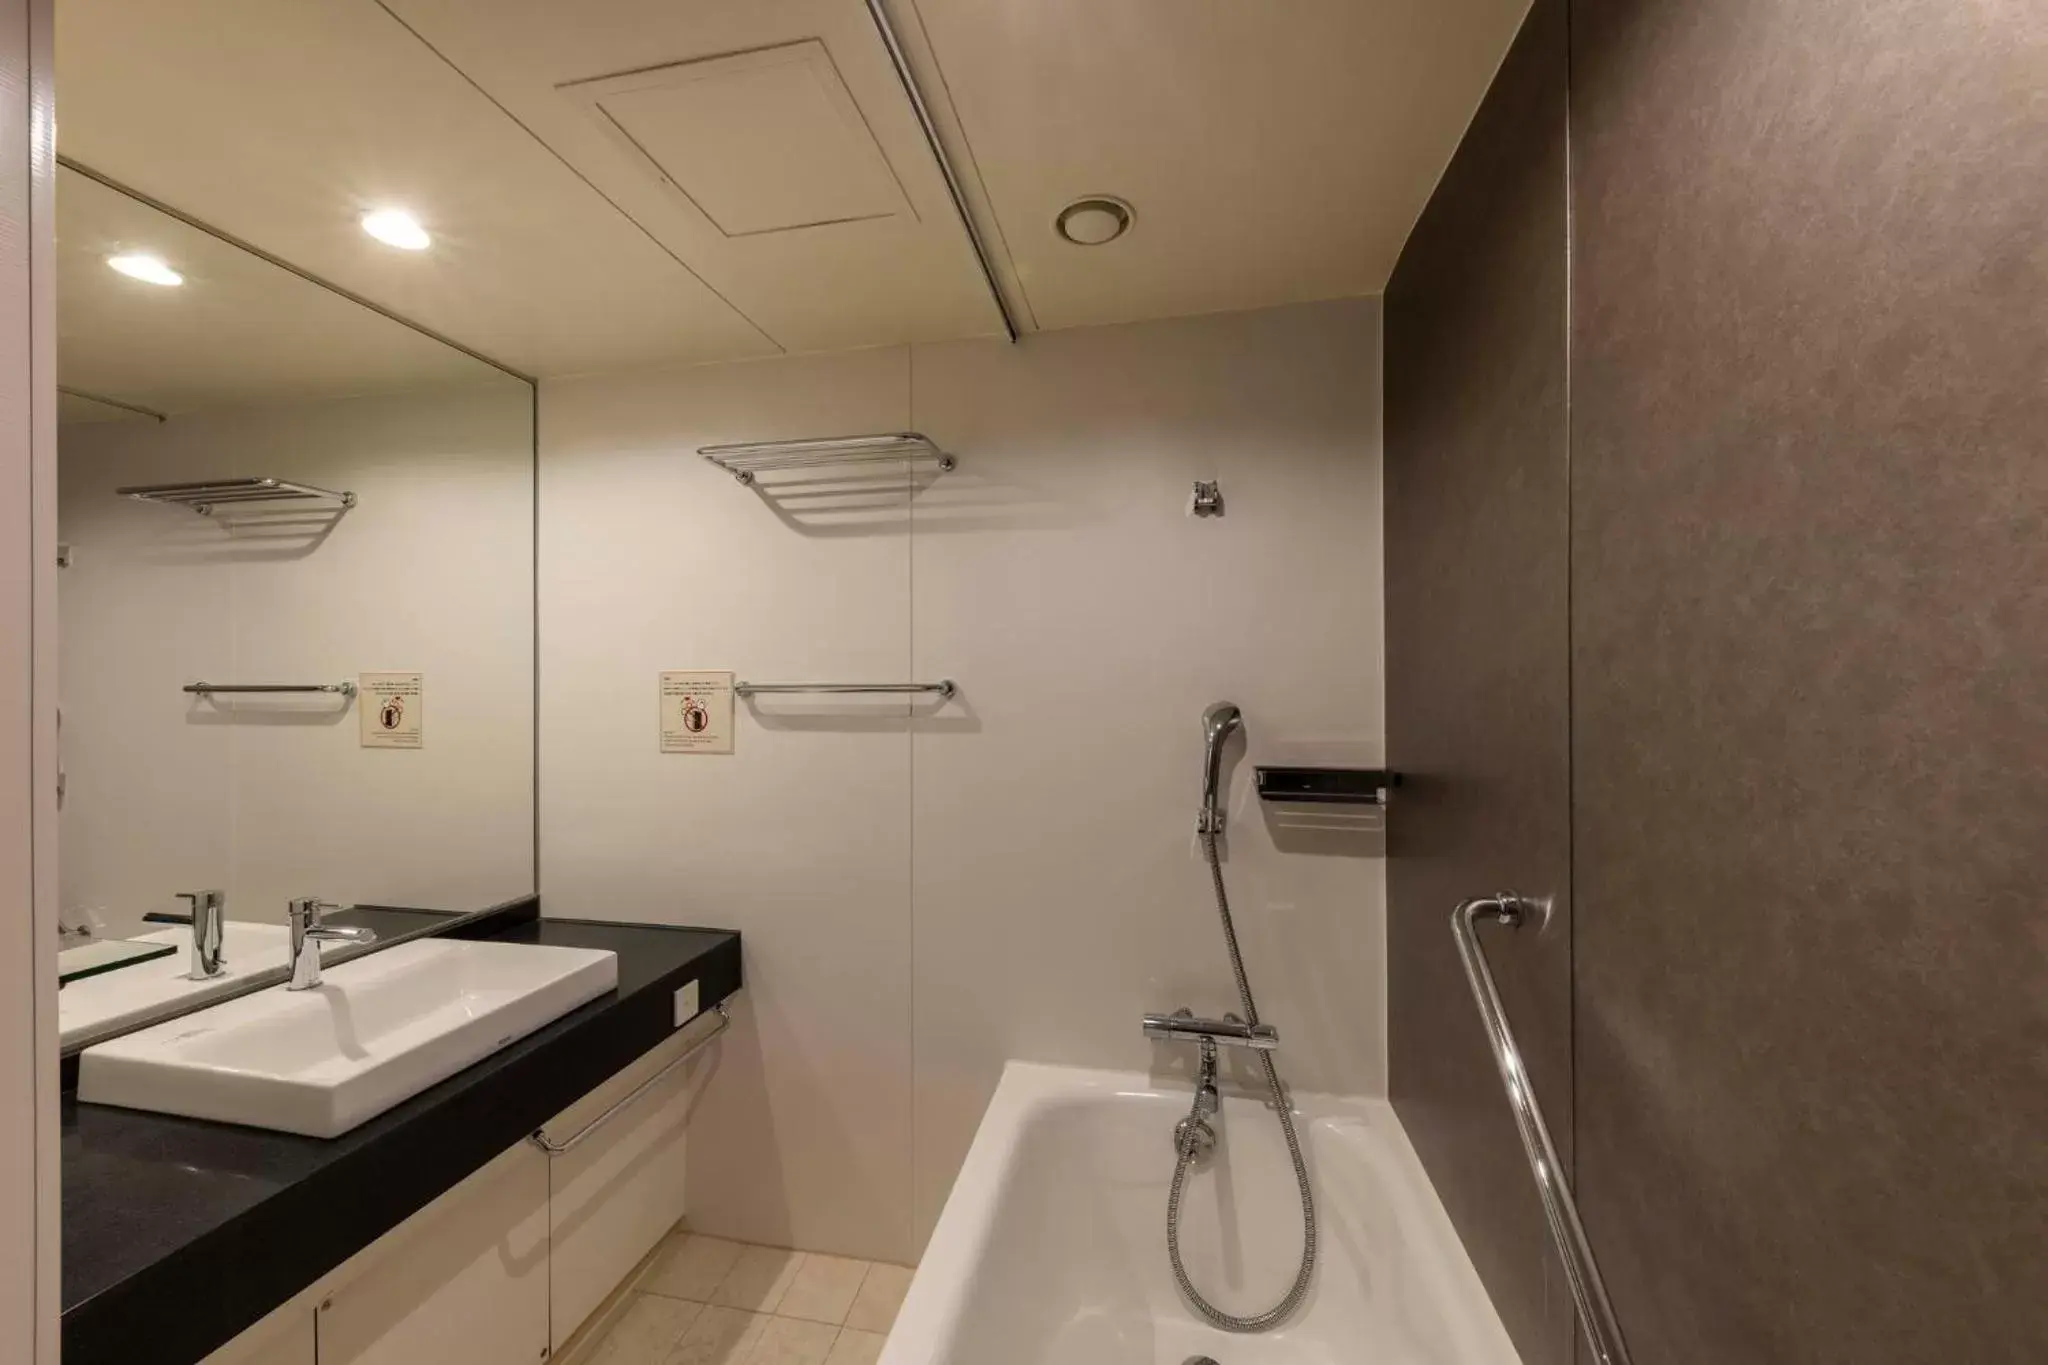 Photo of the whole room, Bathroom in RIHGA Royal Hotel Osaka